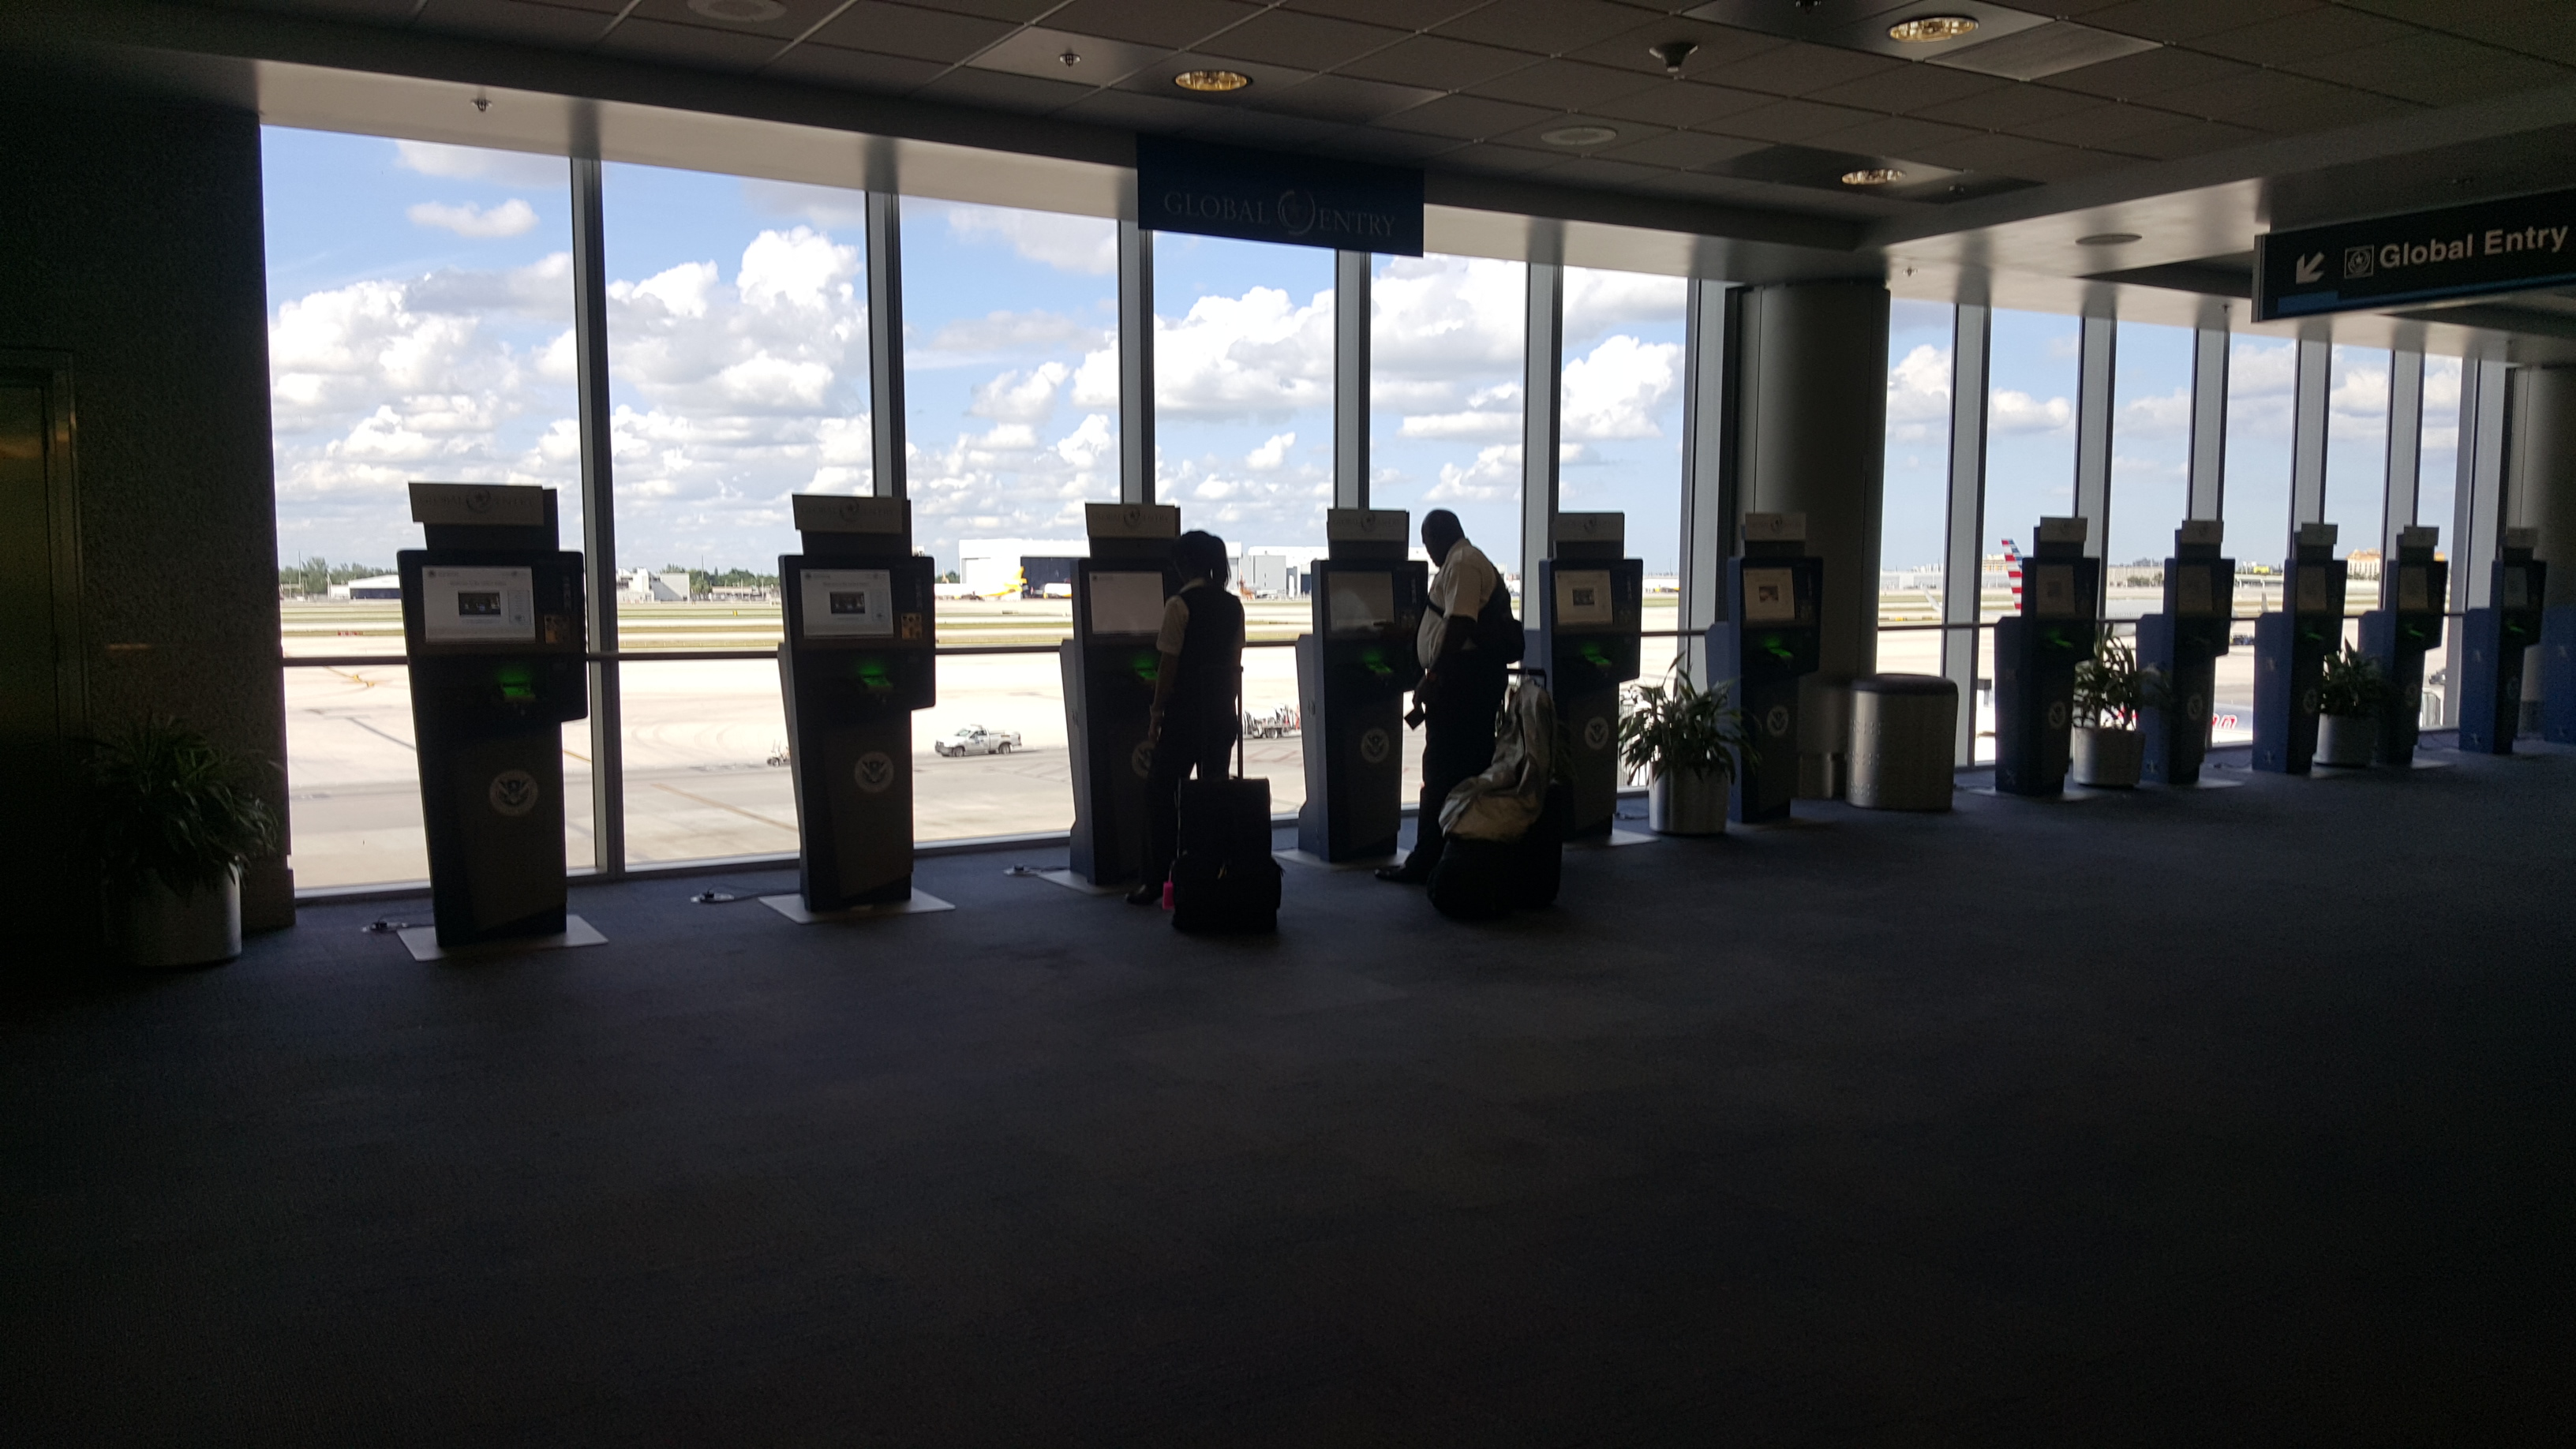 Global Entry MIA Airport immigration kiosks